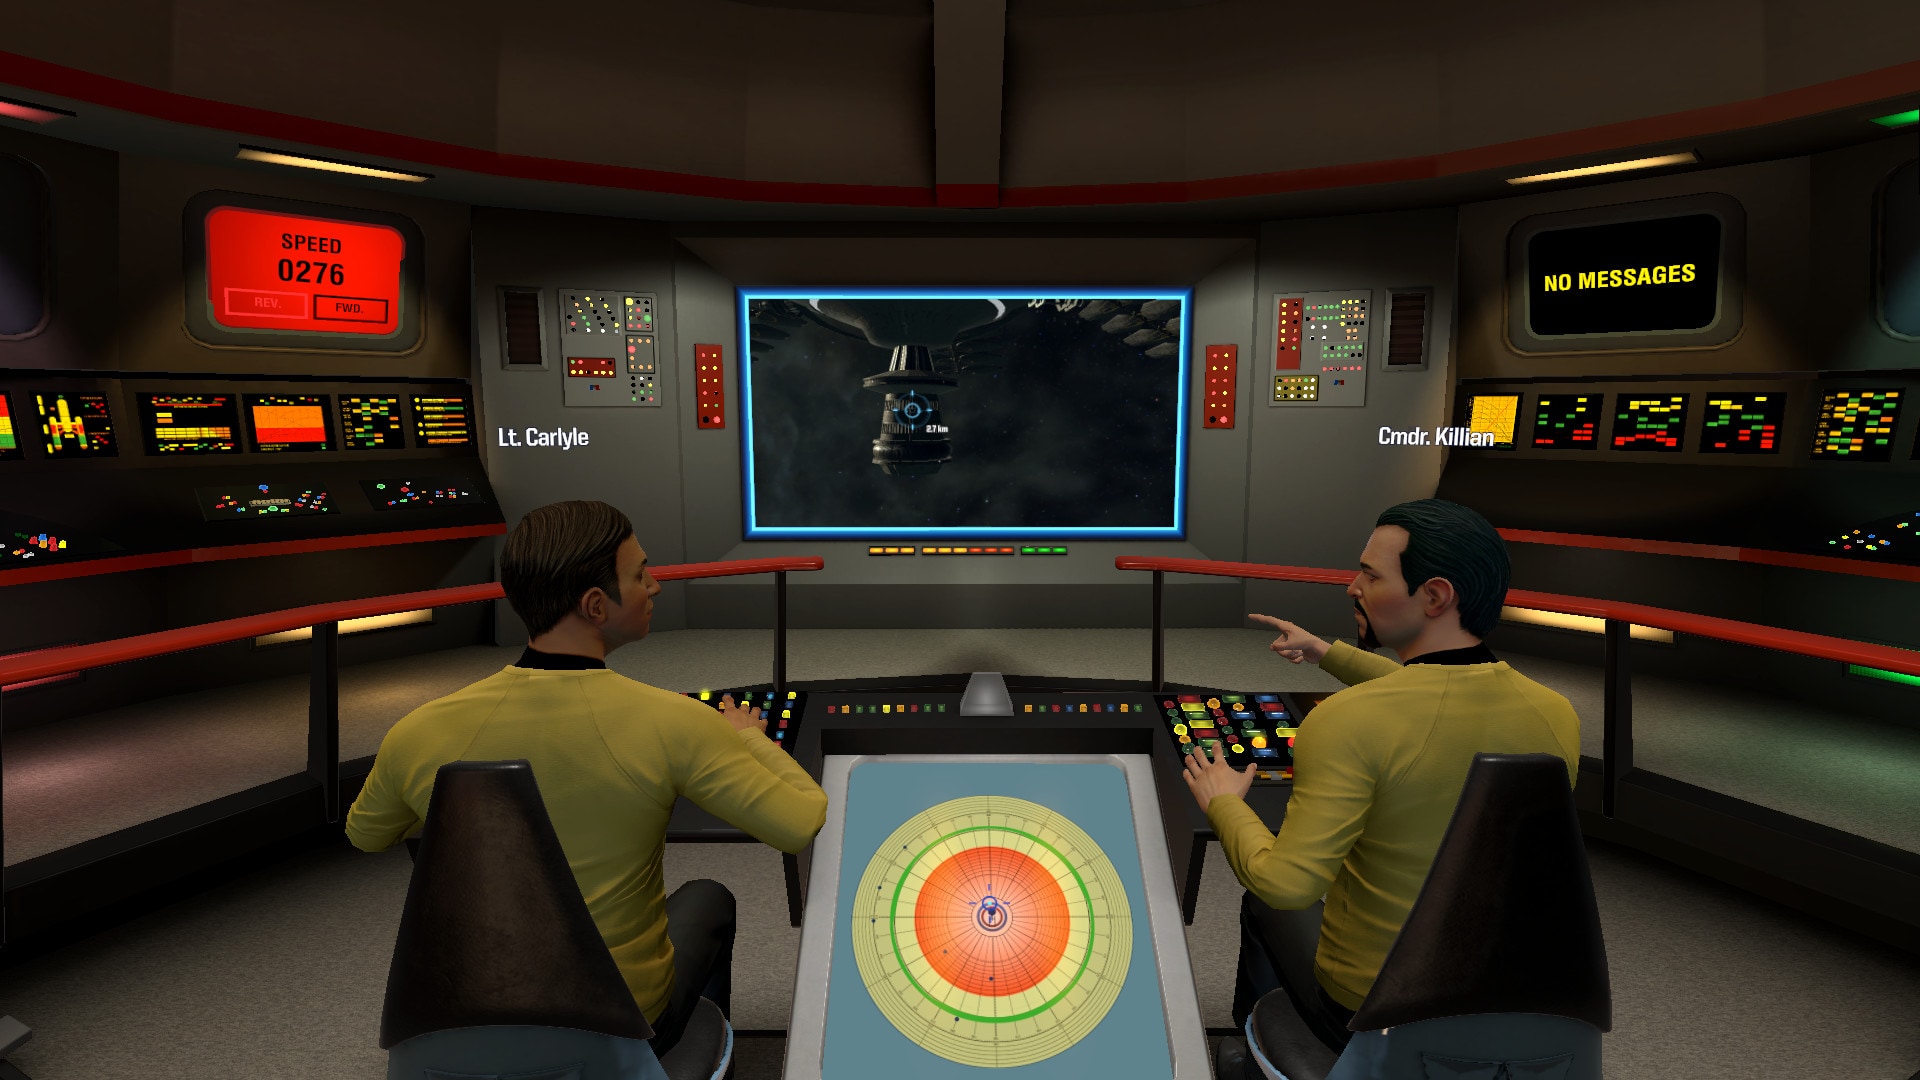 Star Trek: Bridge Crew VR Steam Key GLOBAL - 1